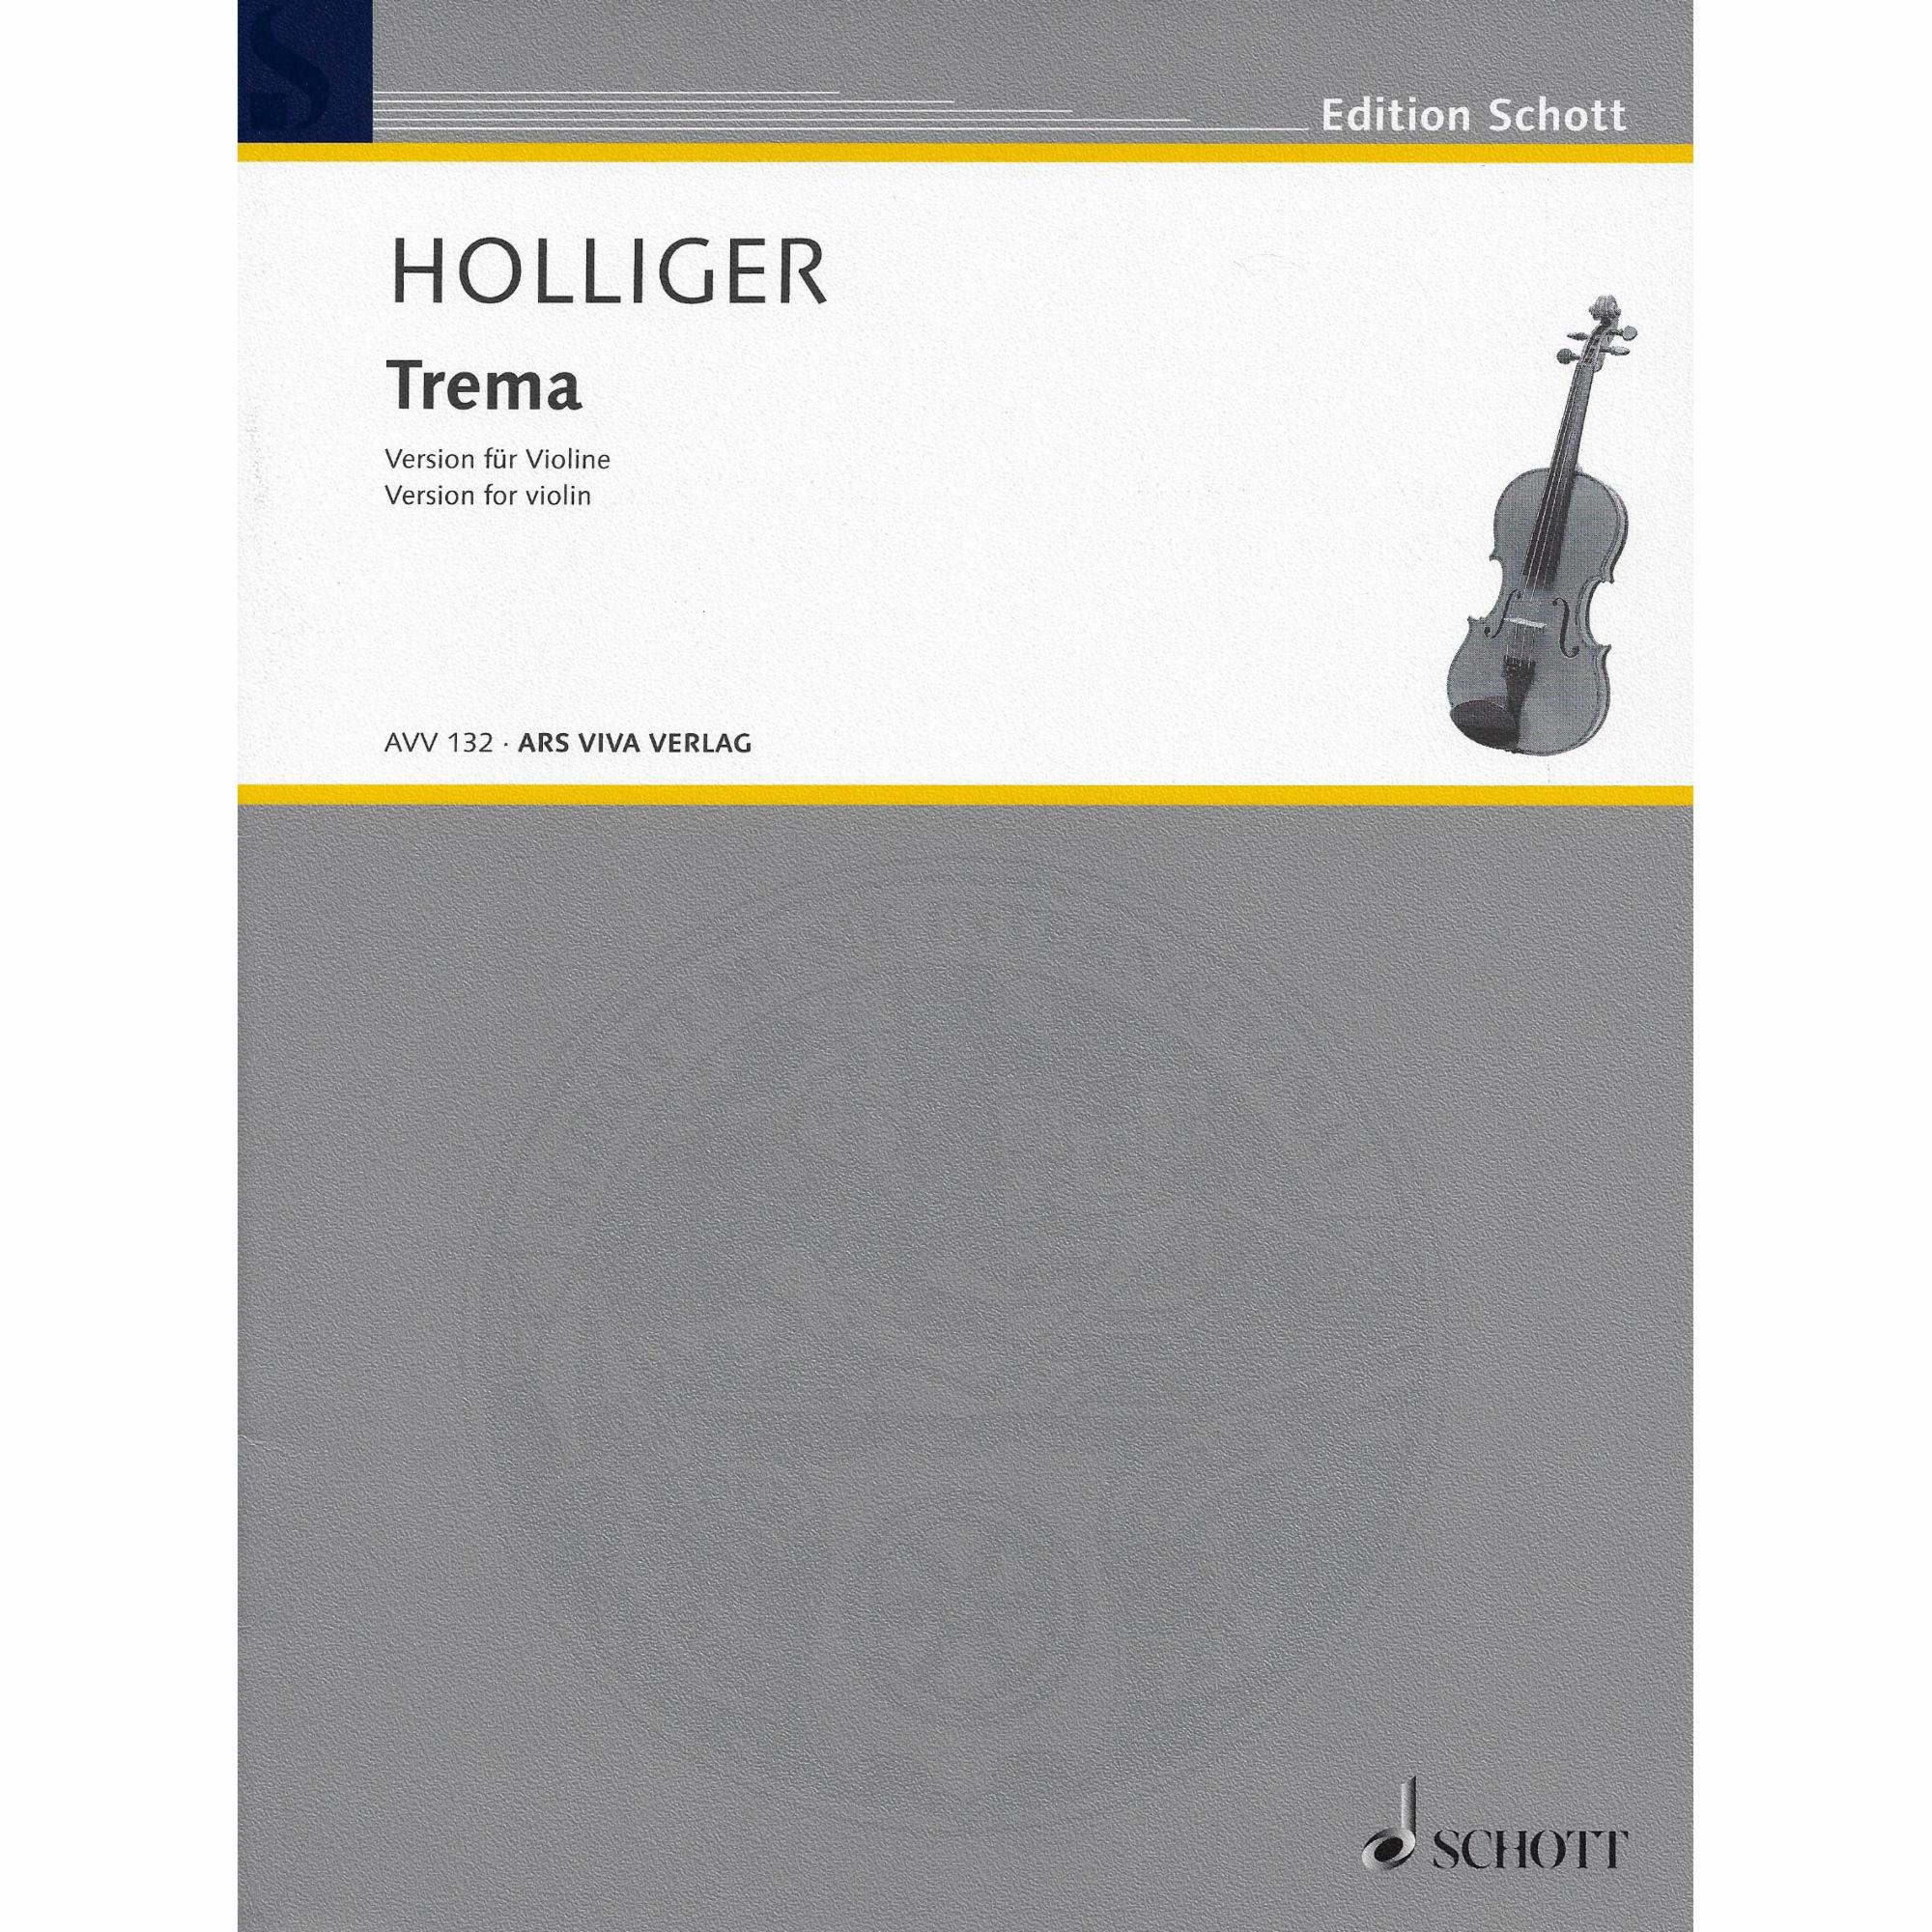 Hollliger -- Trema for Solo Violin